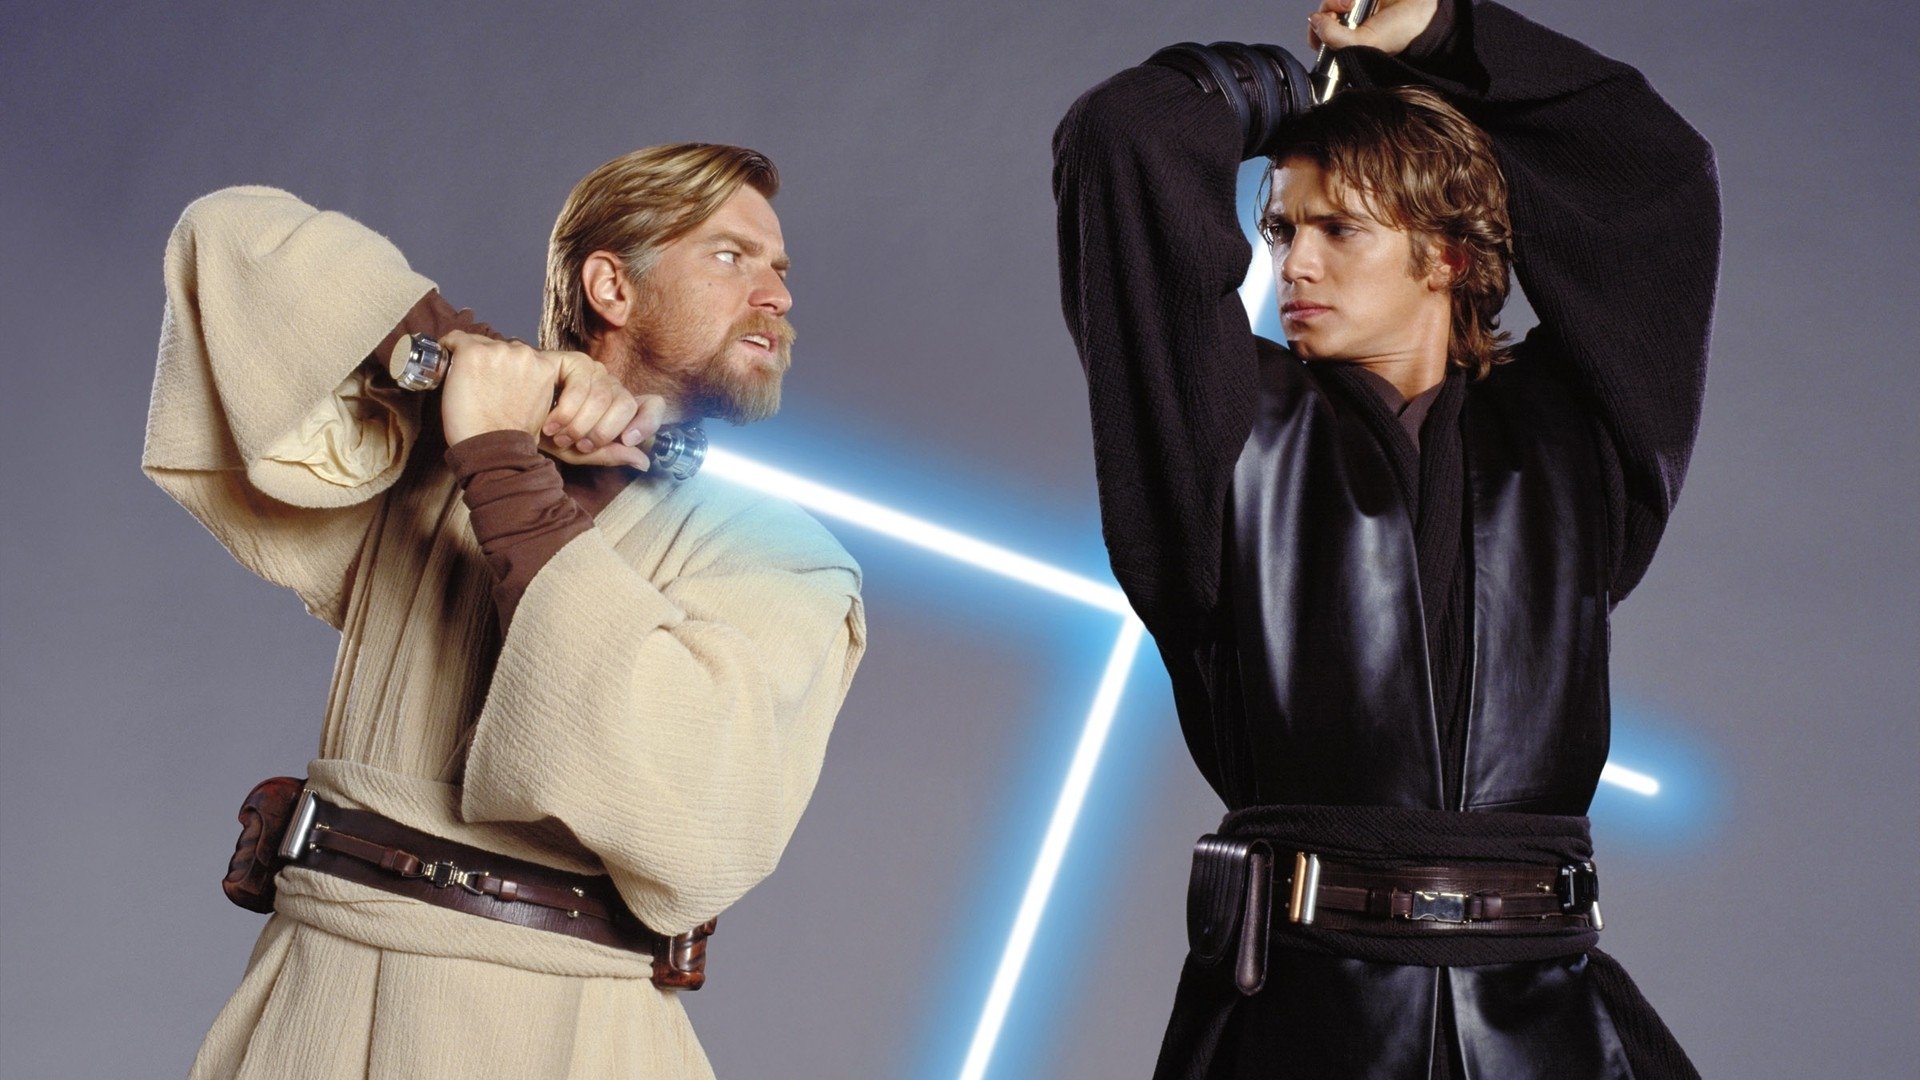 Obi-Wan Kenobi And Anakin Skywalker Wallpapers